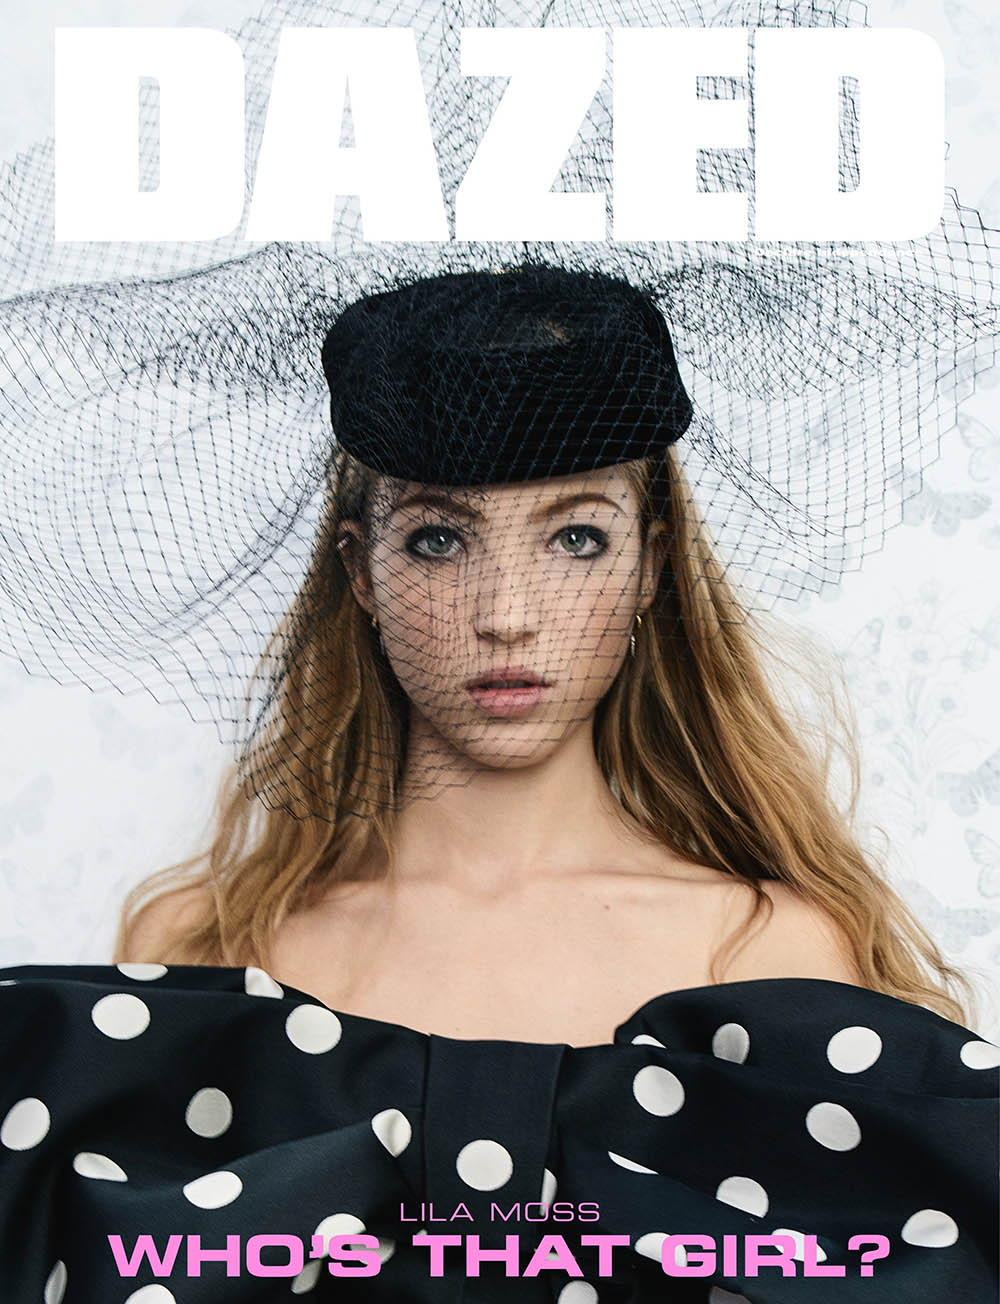 Lily Moss by Tim Walker for Dazed Magazine Winter 2019  (3).jpg